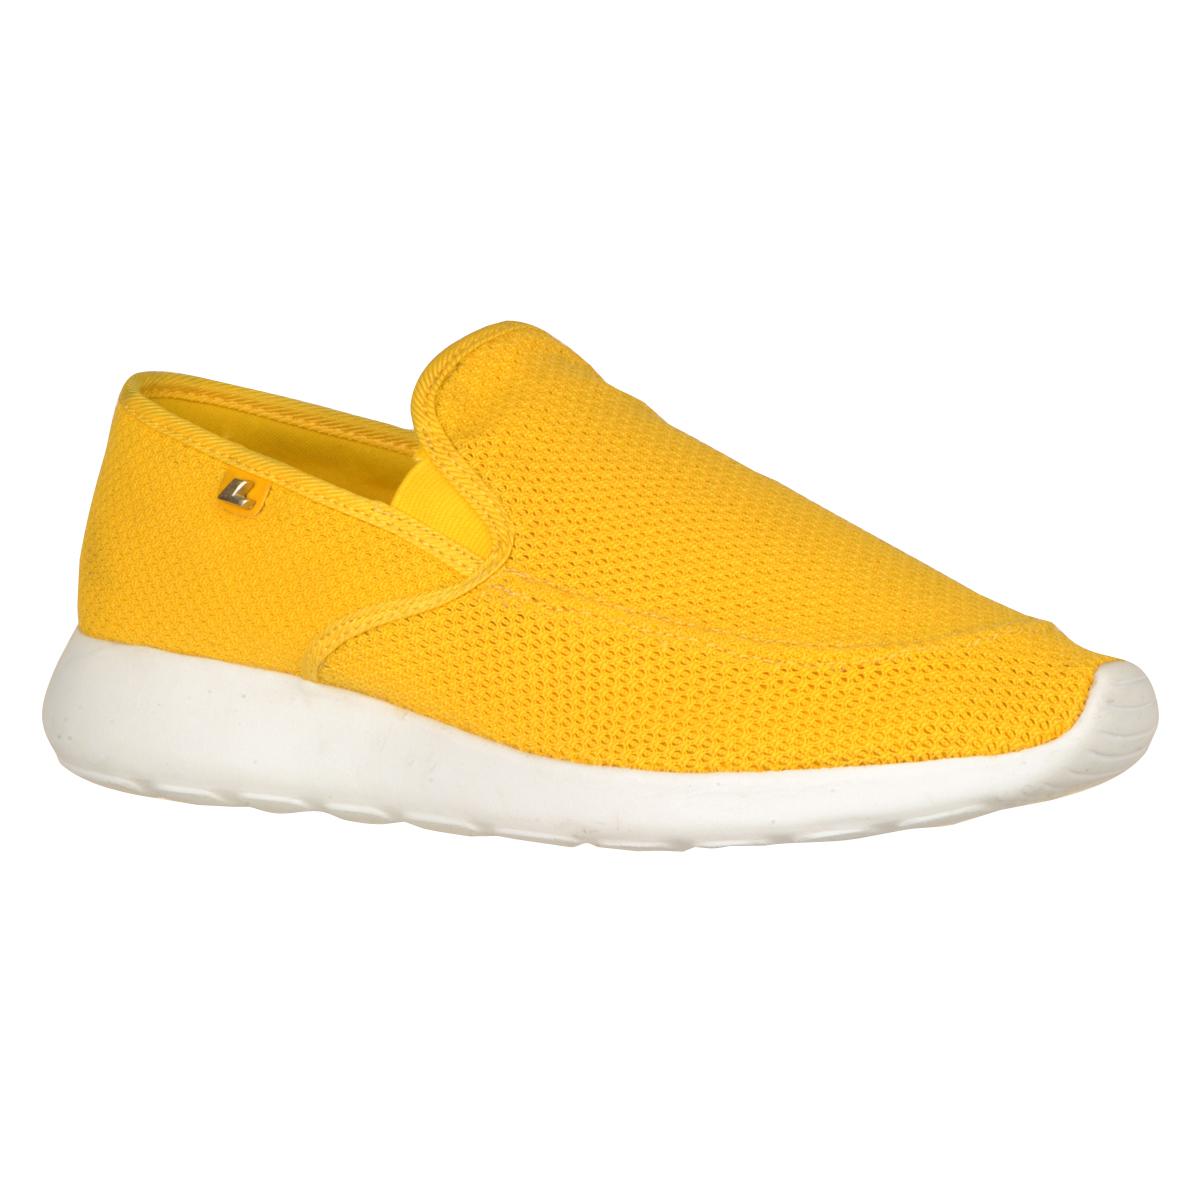 Lugz Men's Zosho Yellow Slip-on Moccasin Sneaker